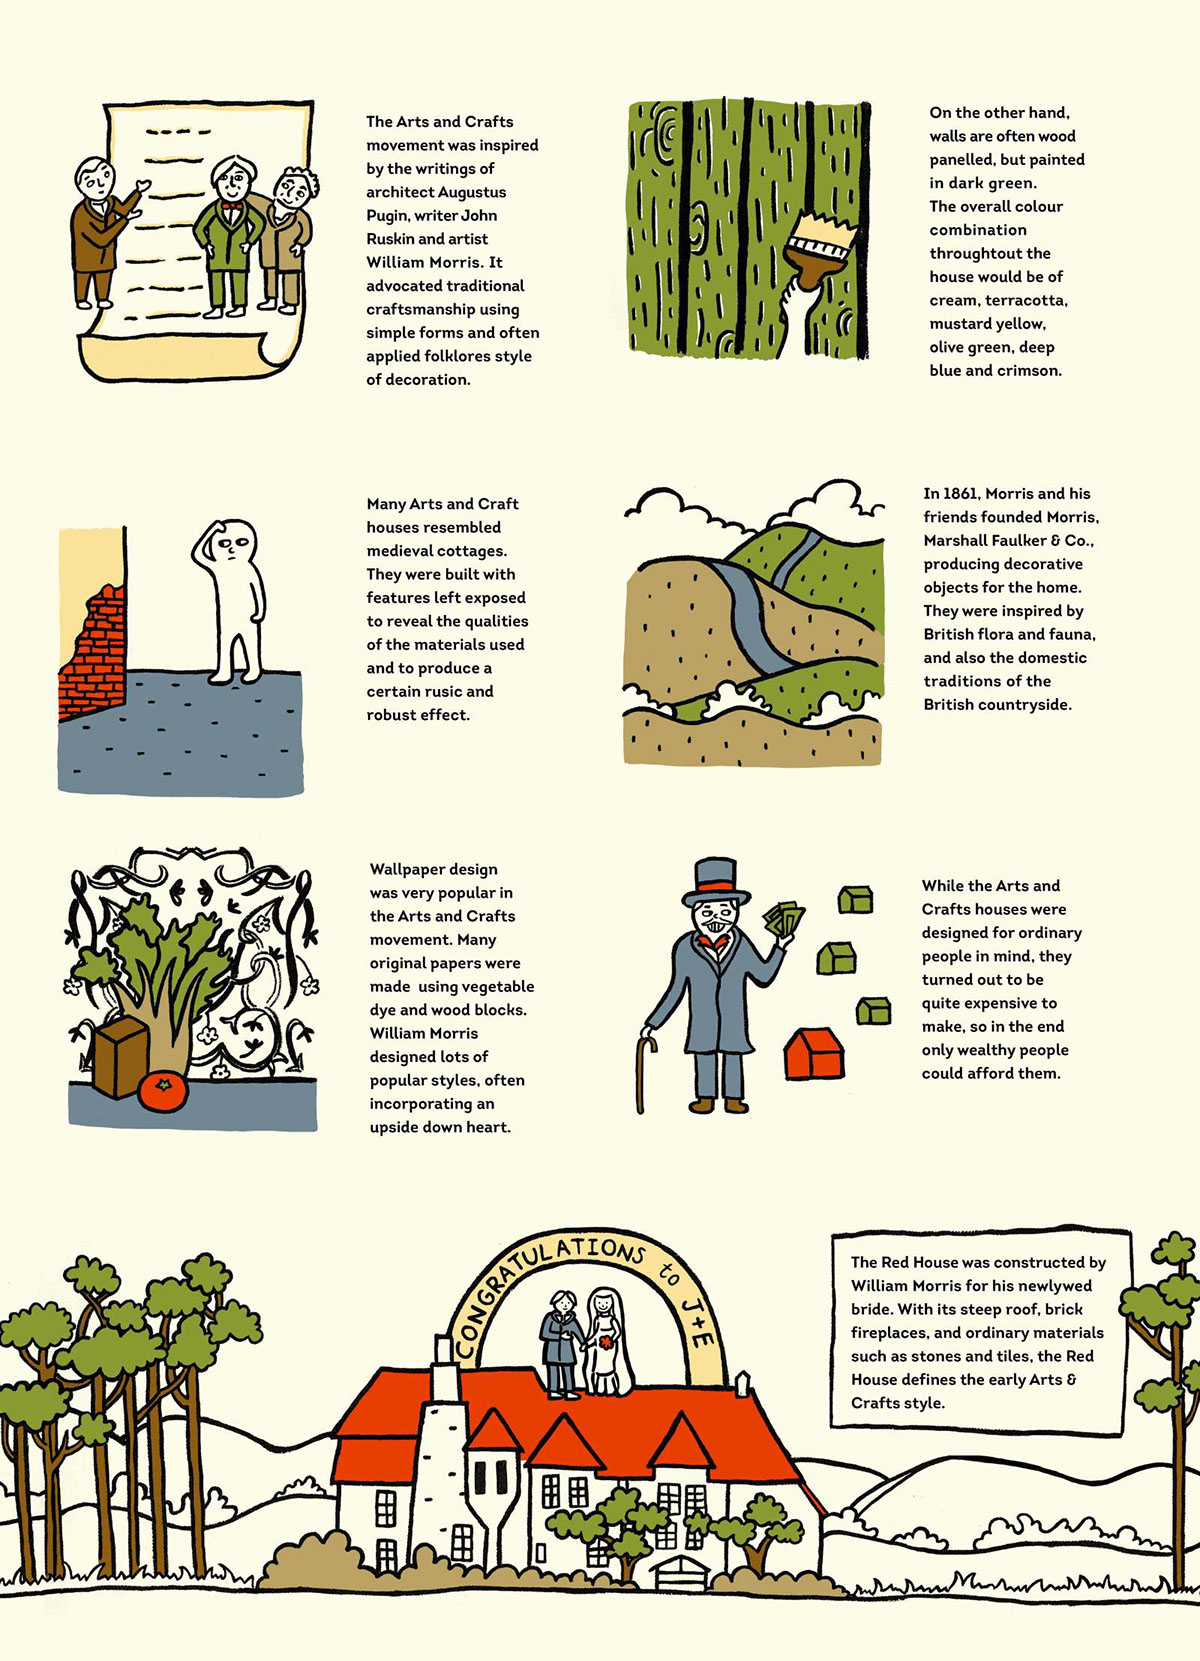 infographic information design illustrative design editorial children's book